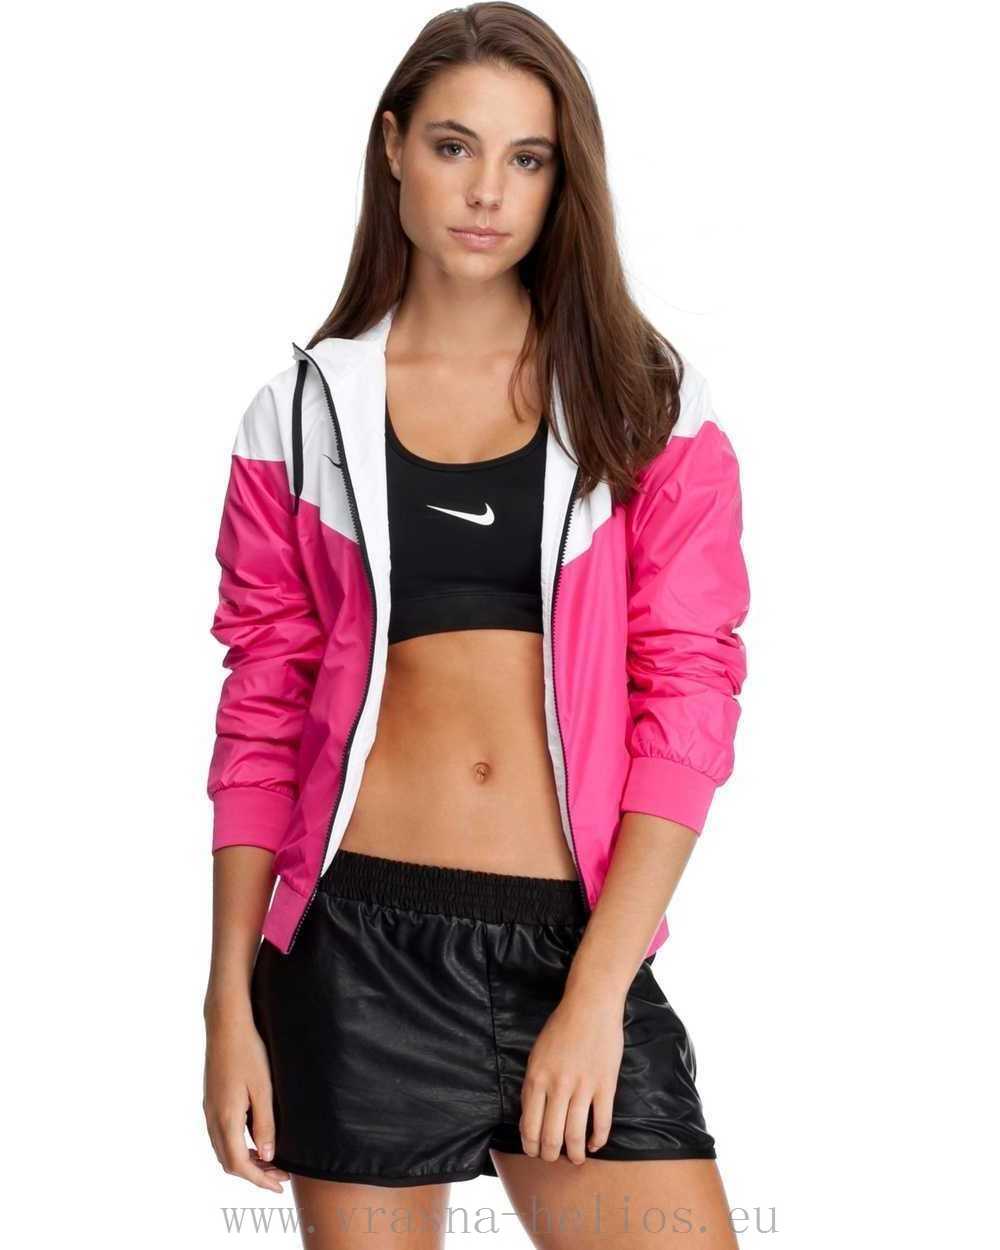 Nice Womens Nike Nike Windrunner Hot Pink White Black - 72997466JY.jpg